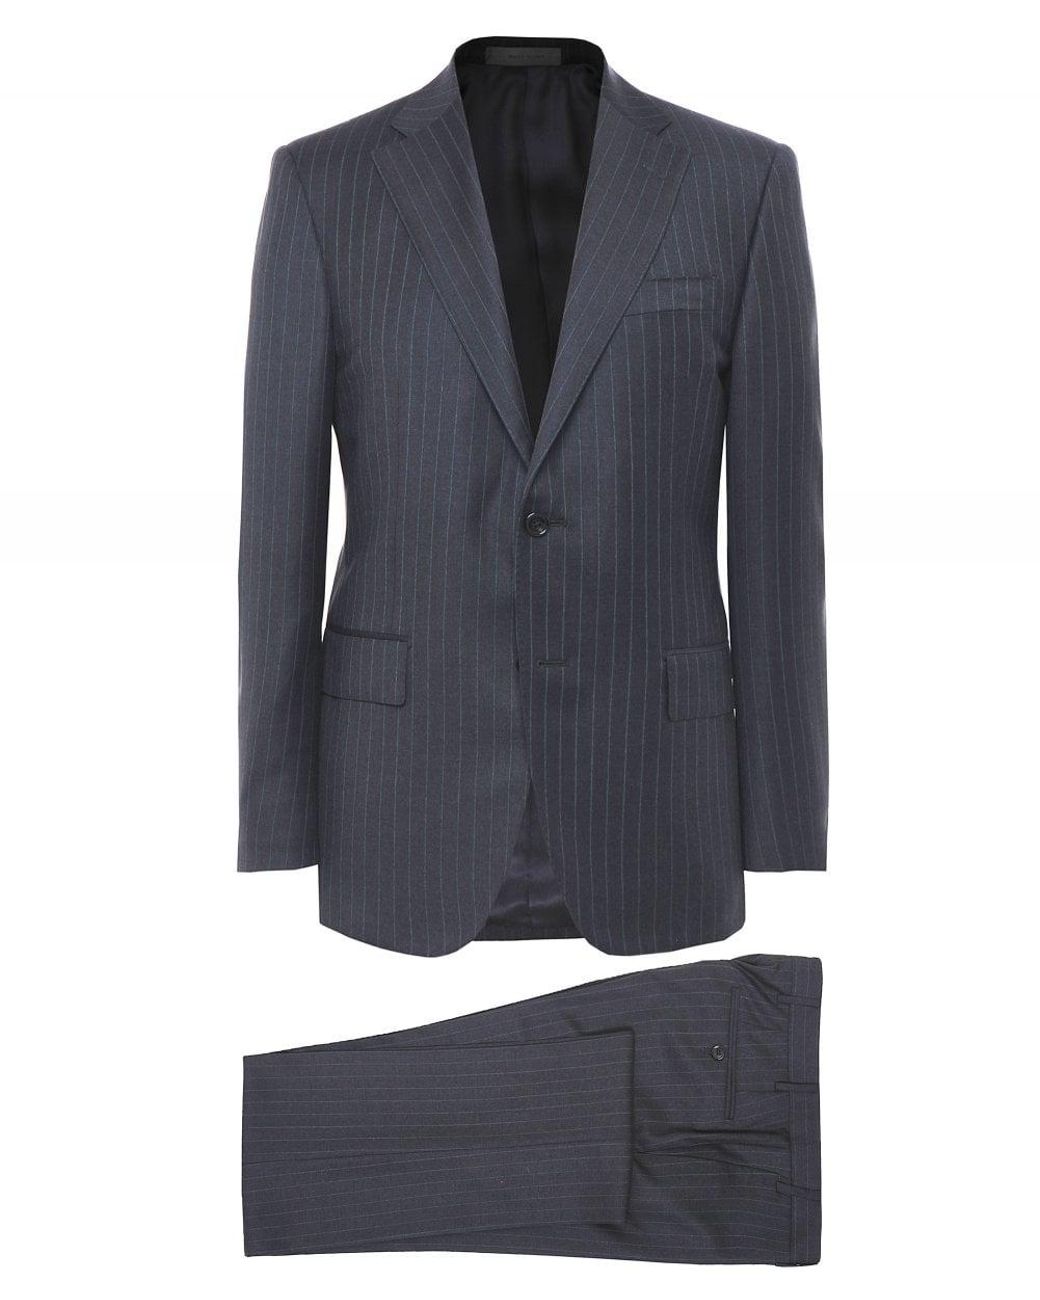 Corneliani Virgin Wool Pinstripe Suit in Gray (Blue) for Men - Save 56% ...